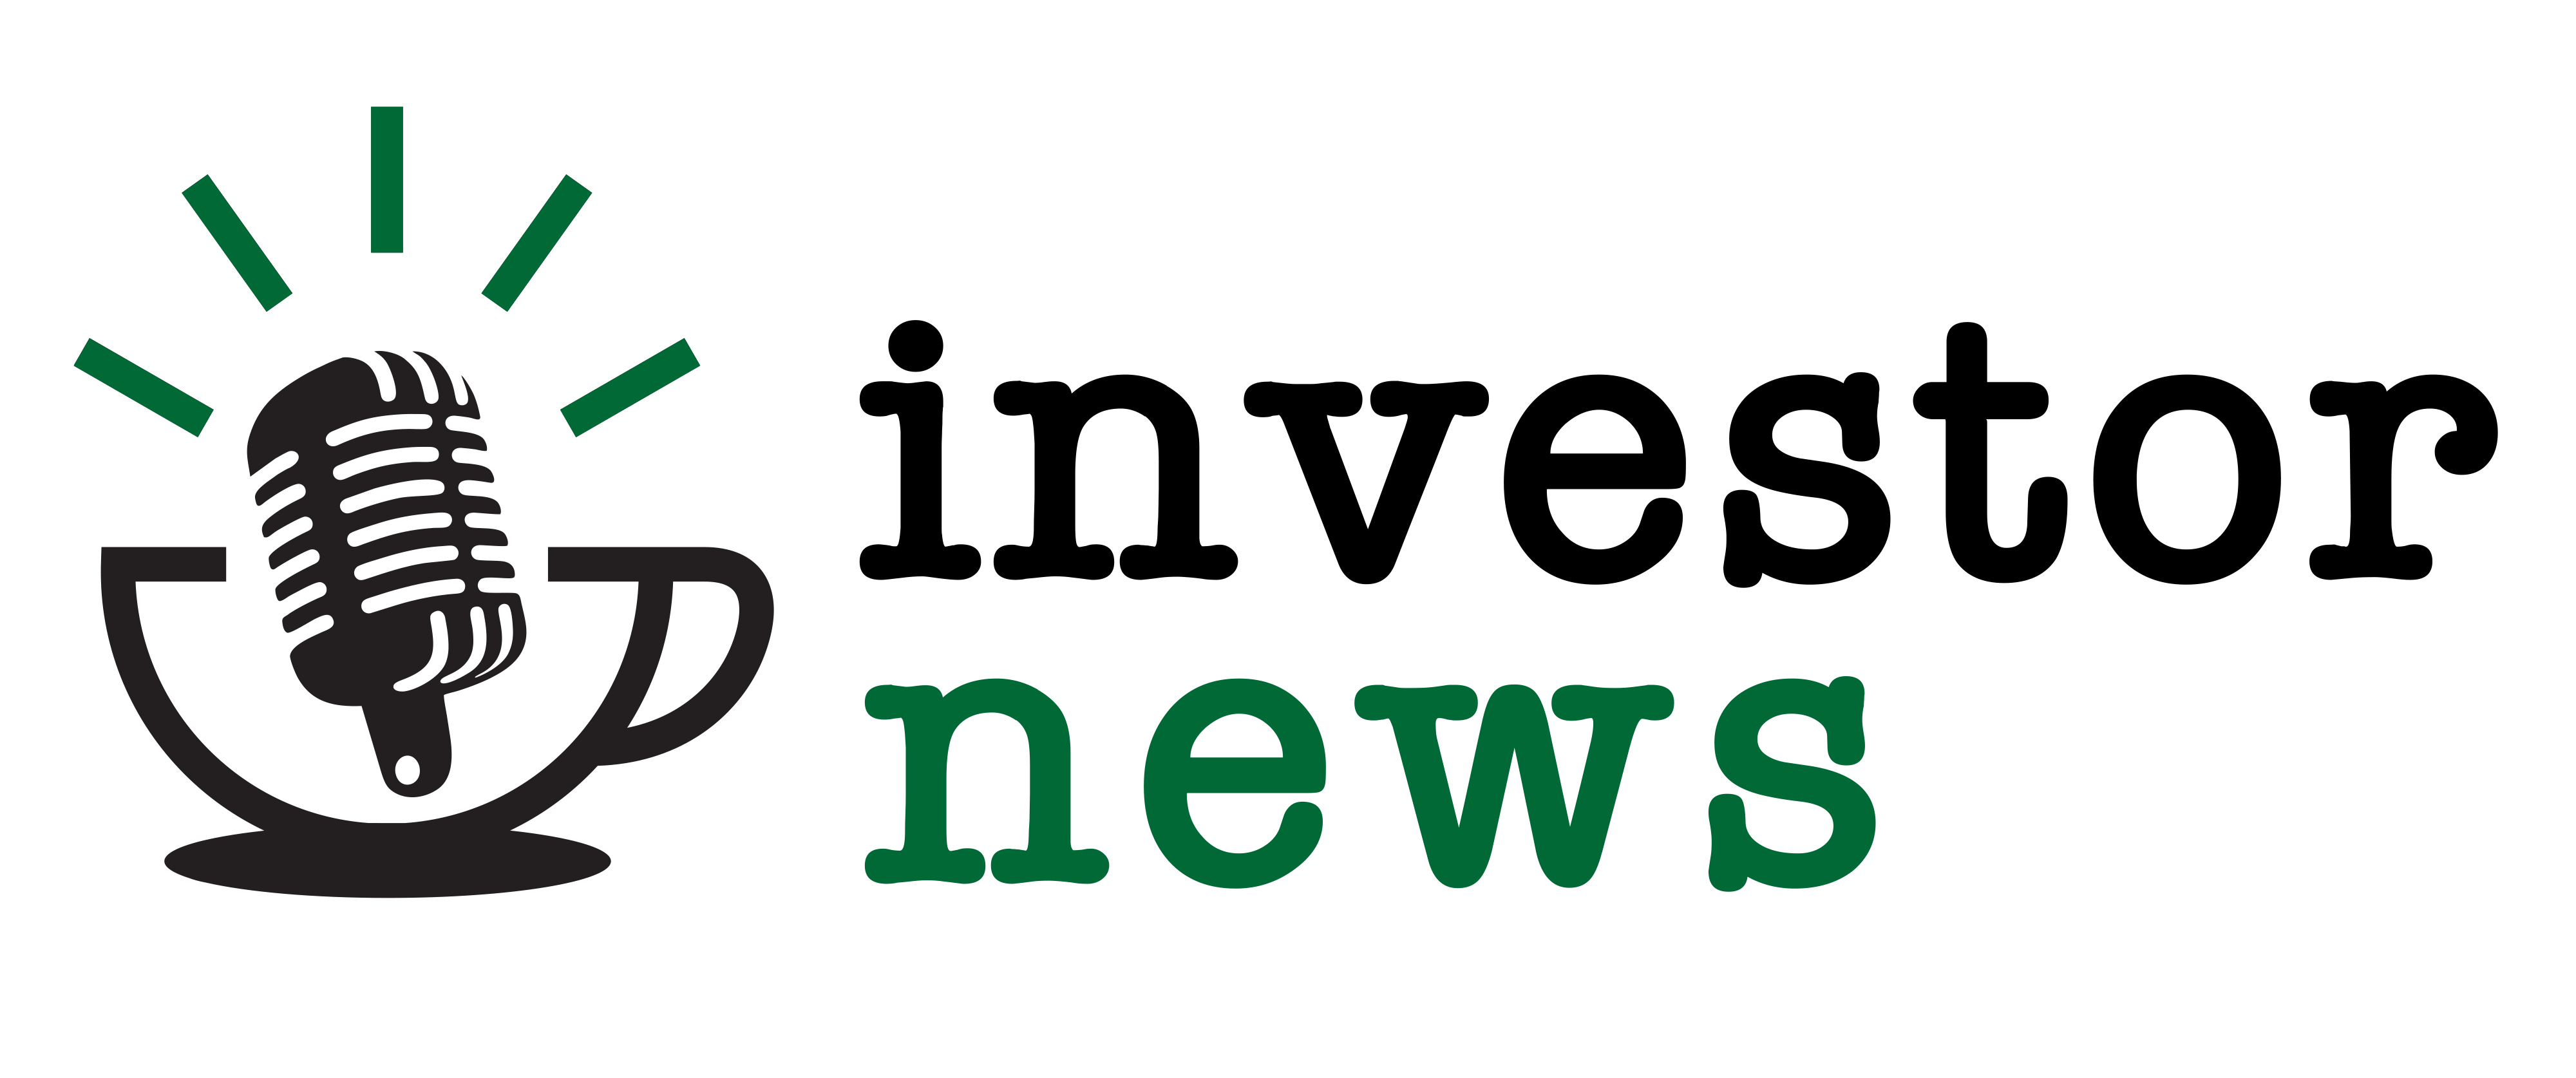 Investor news network logo